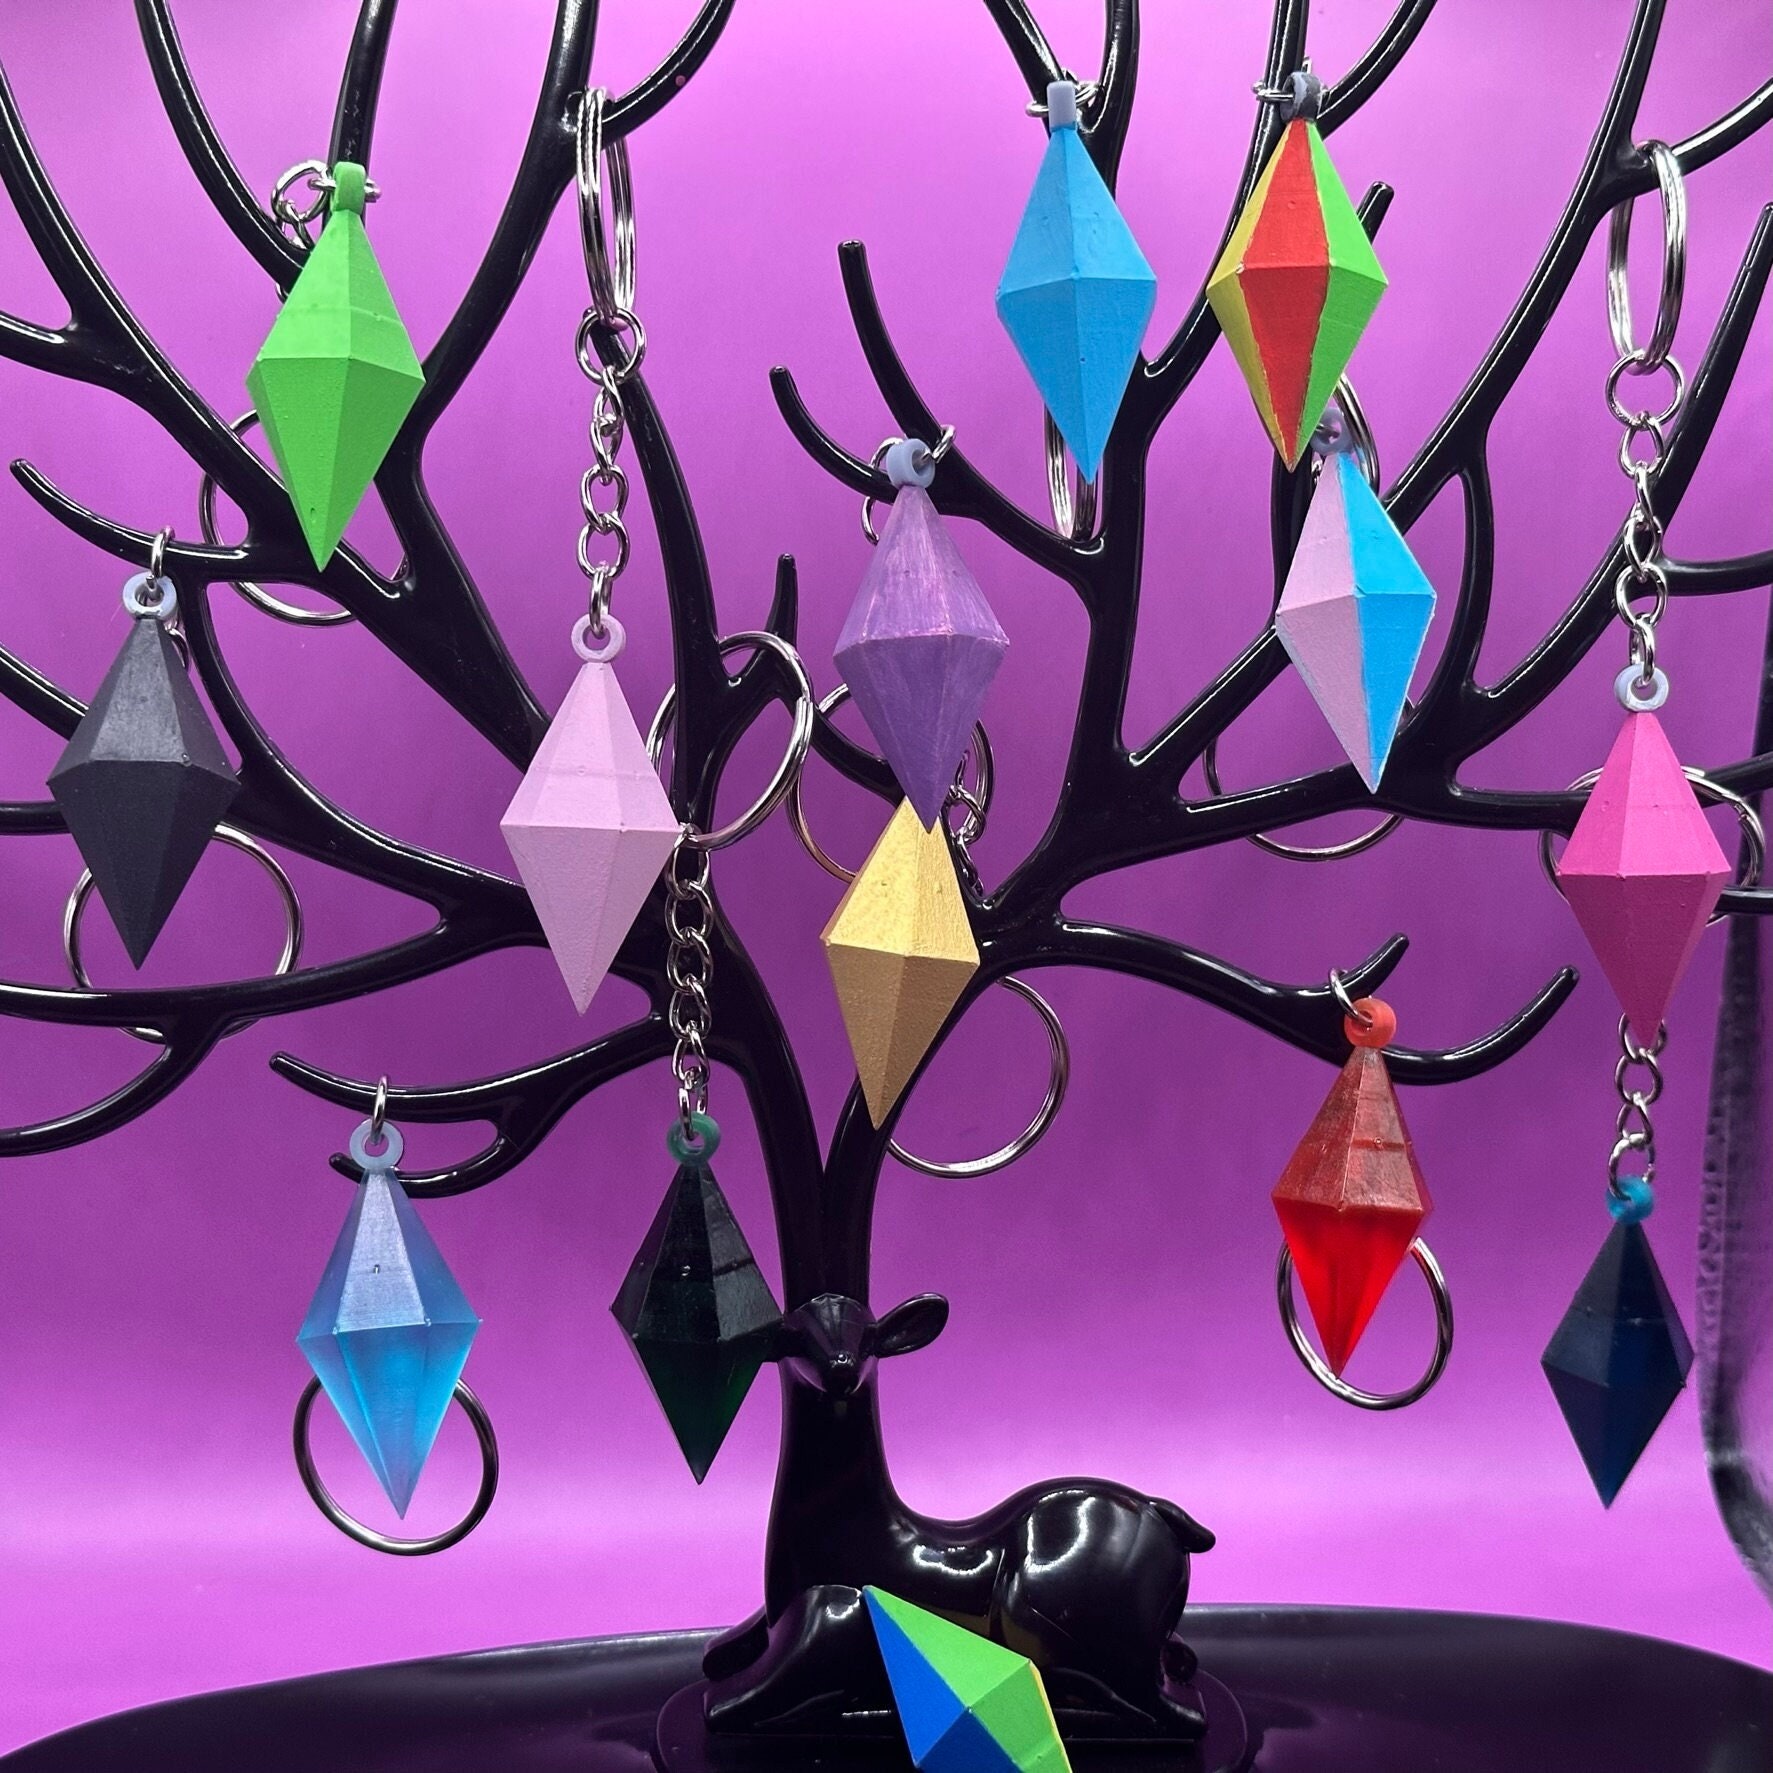 Minimalist designer key holder – The Sims Shop